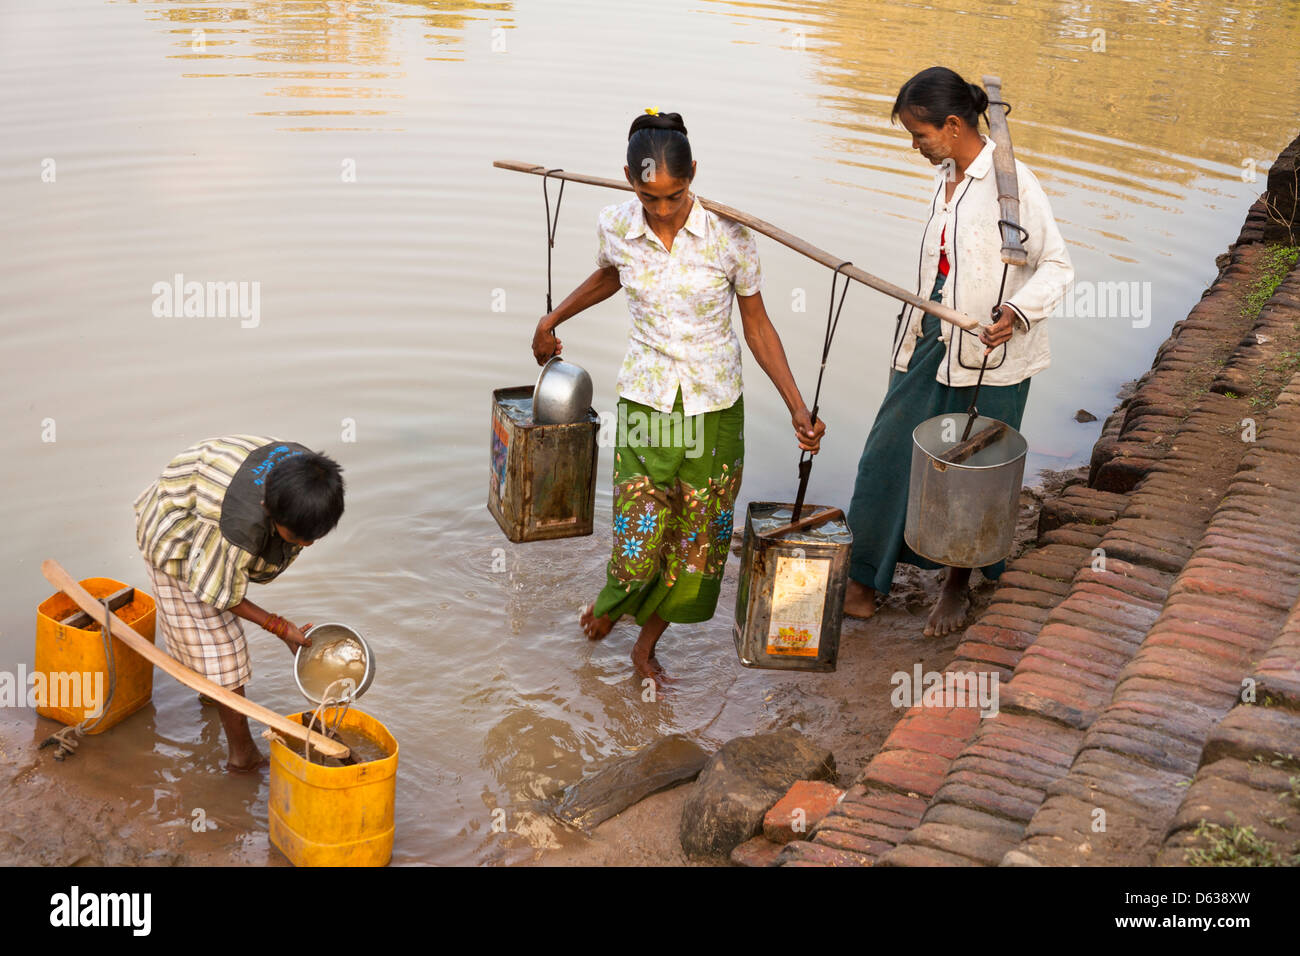 Villagers collecting water from a lake, Minnanthu, Bagan, Myanmar, (Burma) Stock Photo